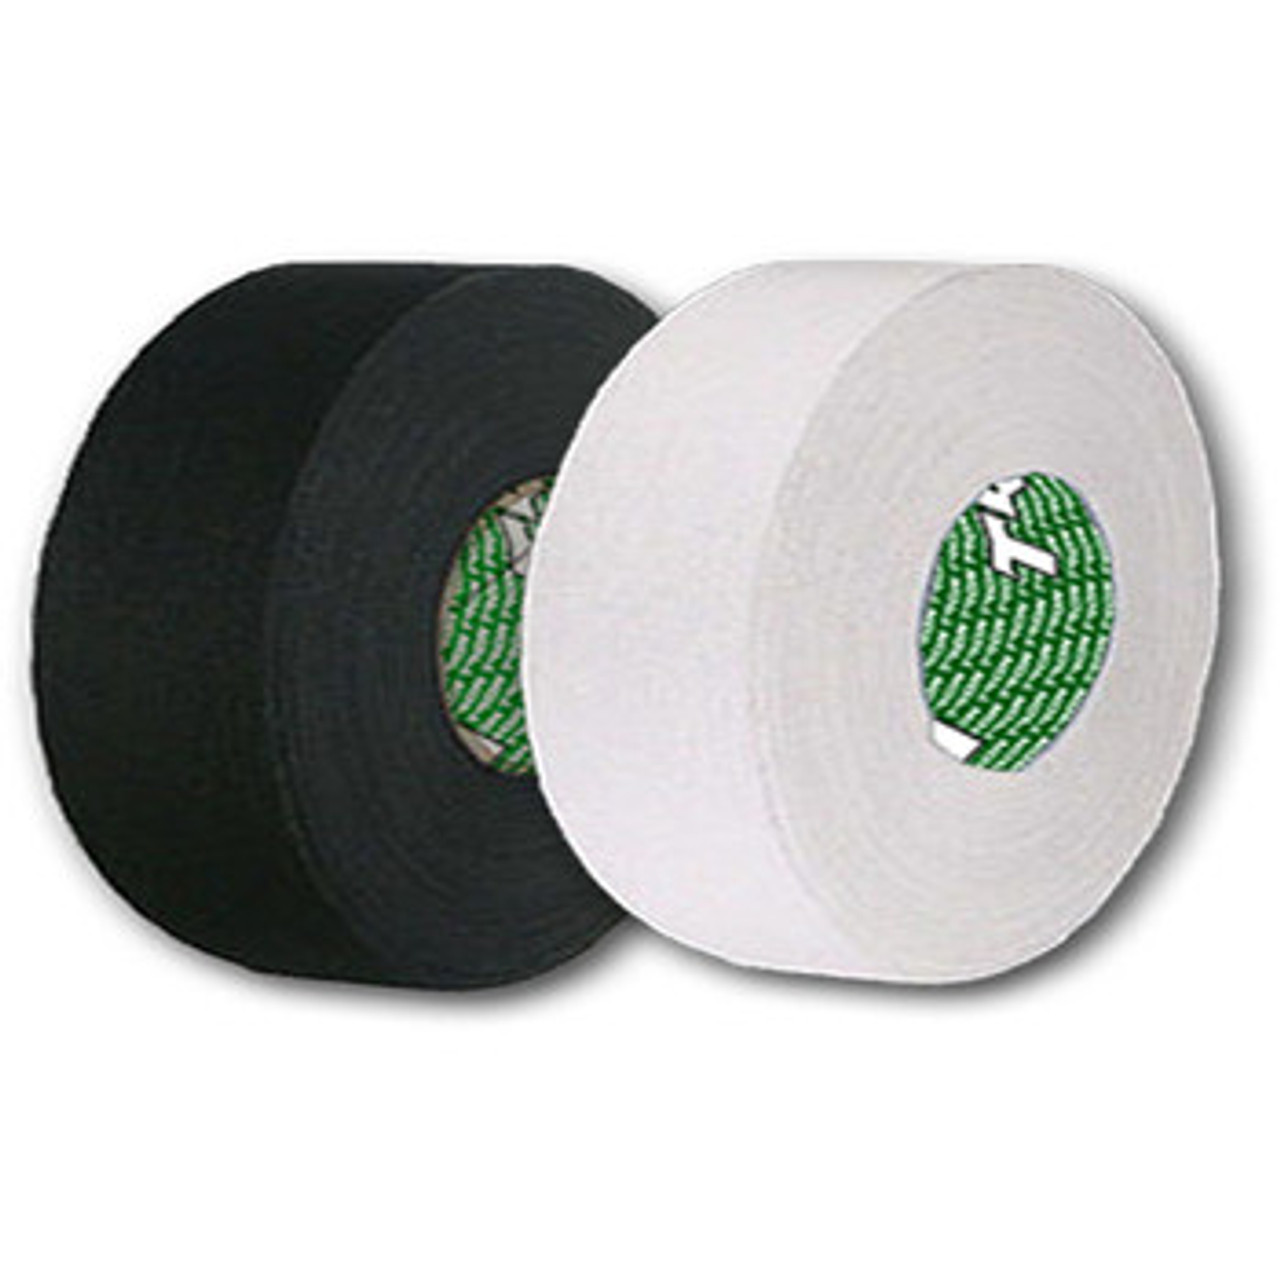 Tron Cloth Hockey Tape 1.5 Inch